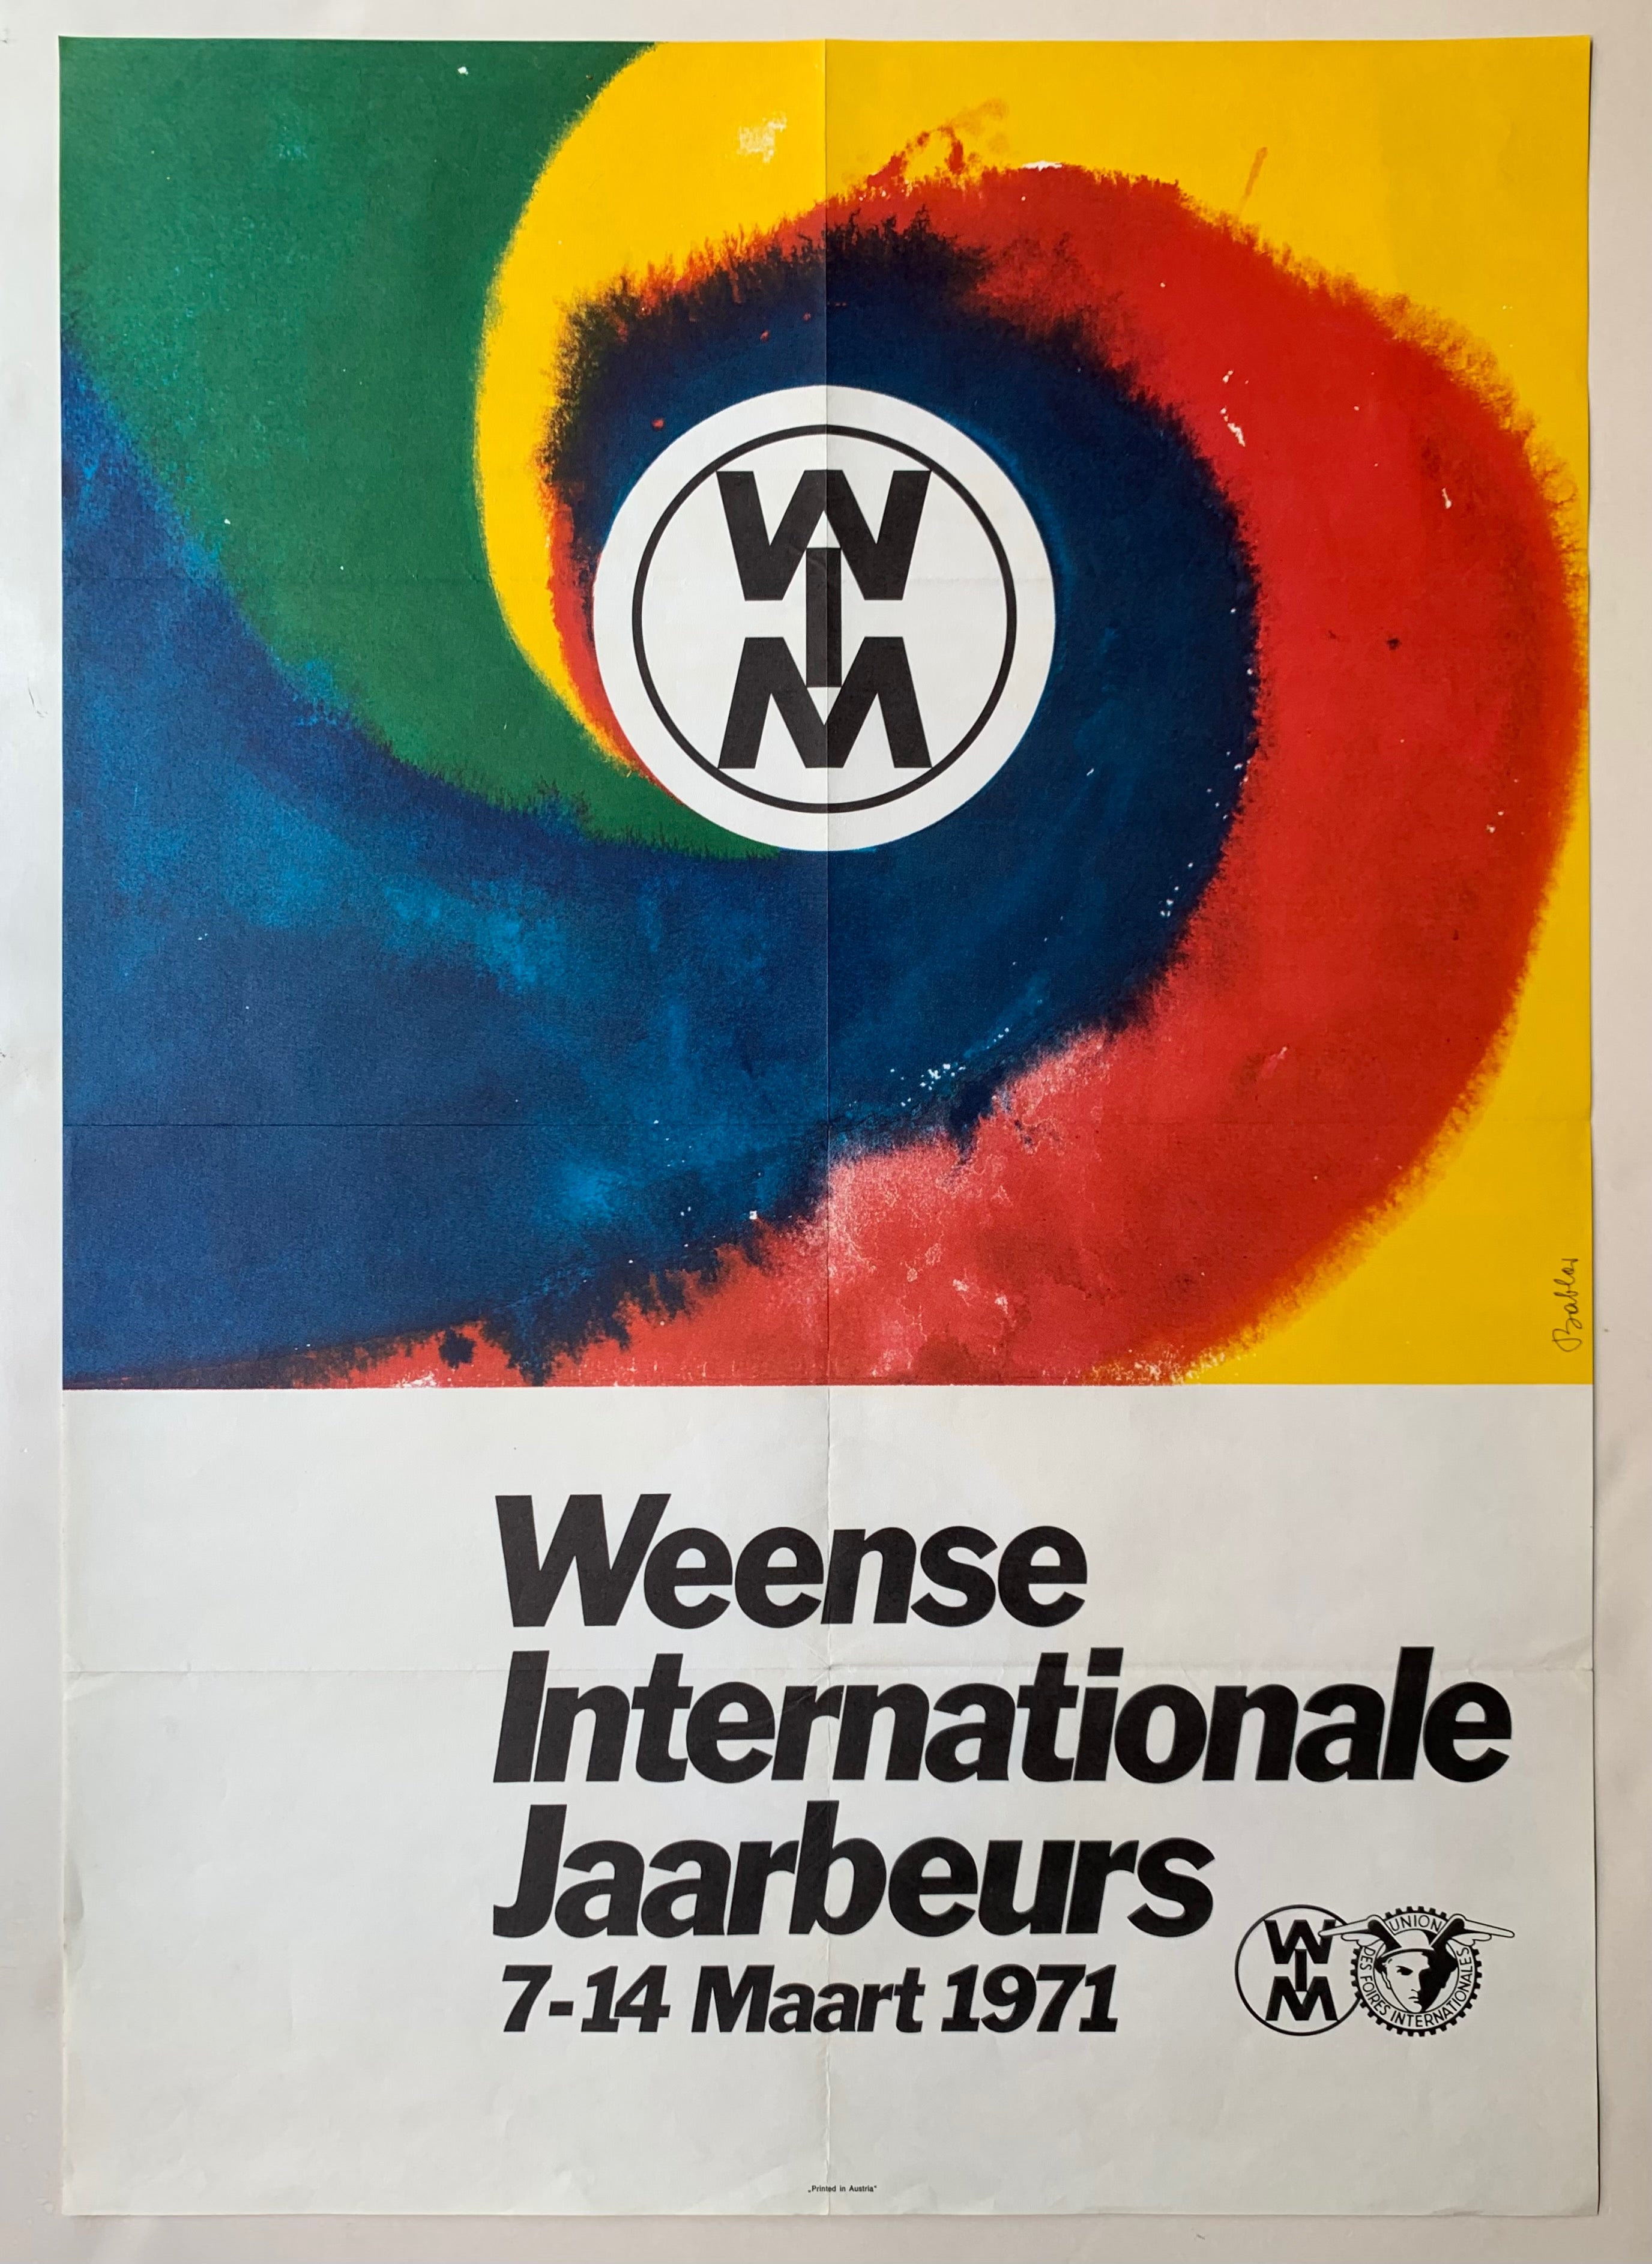 Weense Internationale Jaarbeurs 1971 Poster